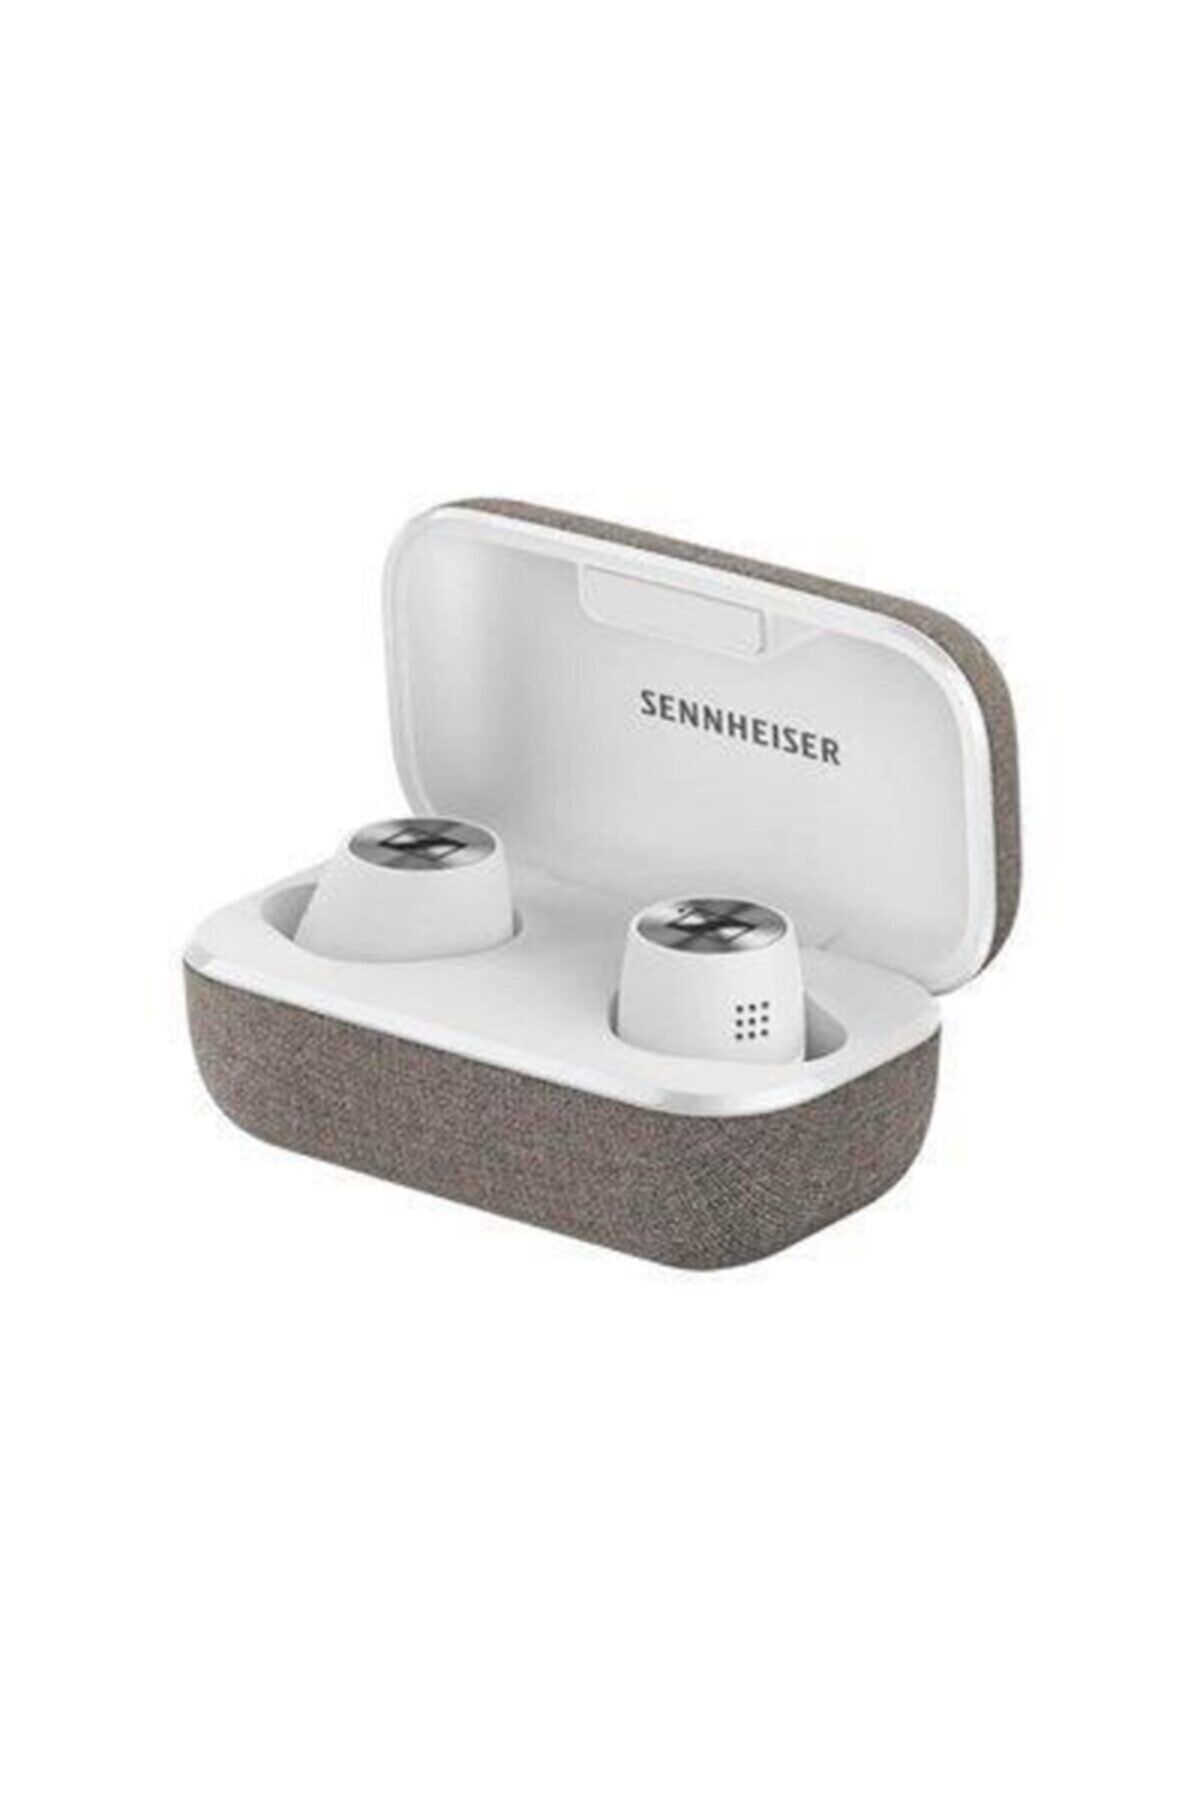 Sennheiser Momentum True Wireless 2 Kulak Içi Kulaklık Beyaz